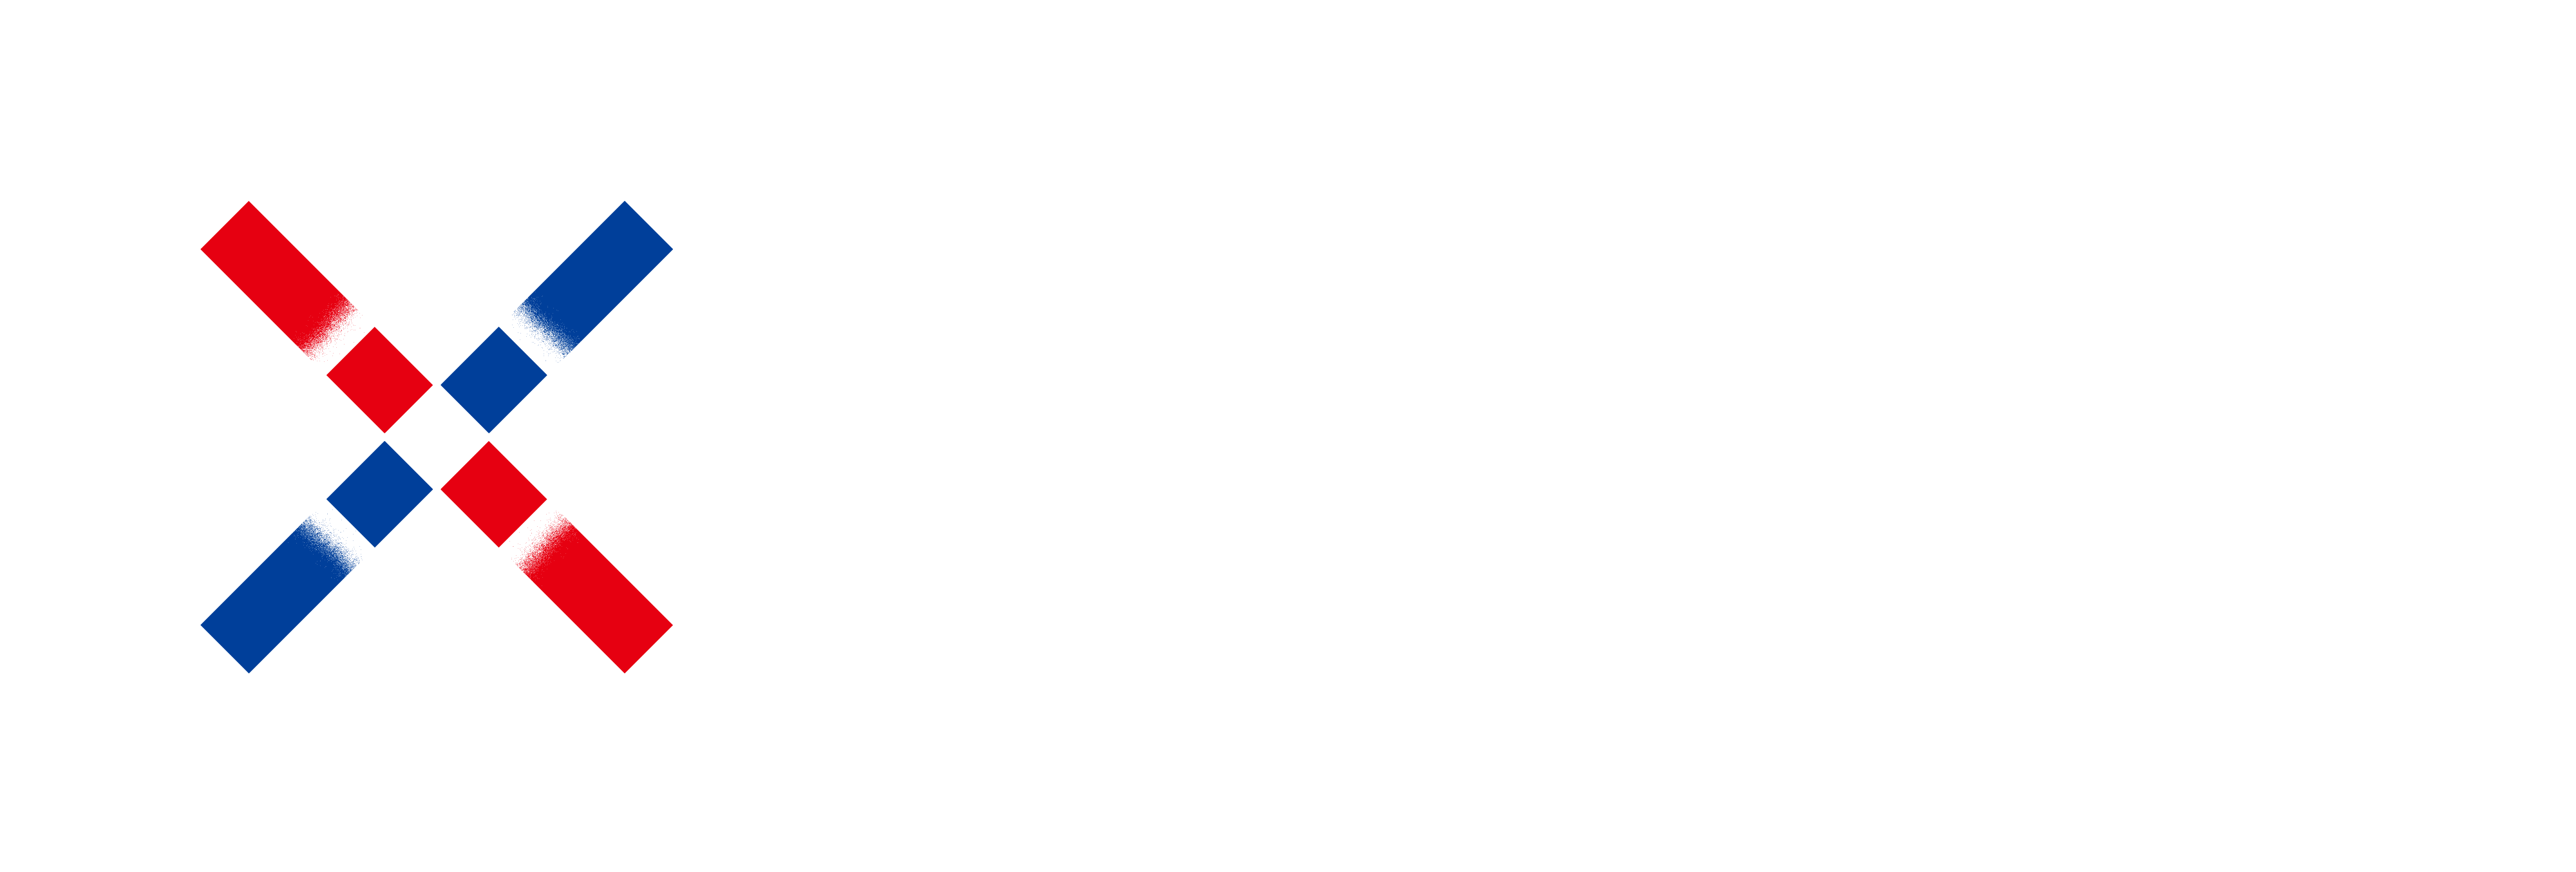 crossU logo nagetive